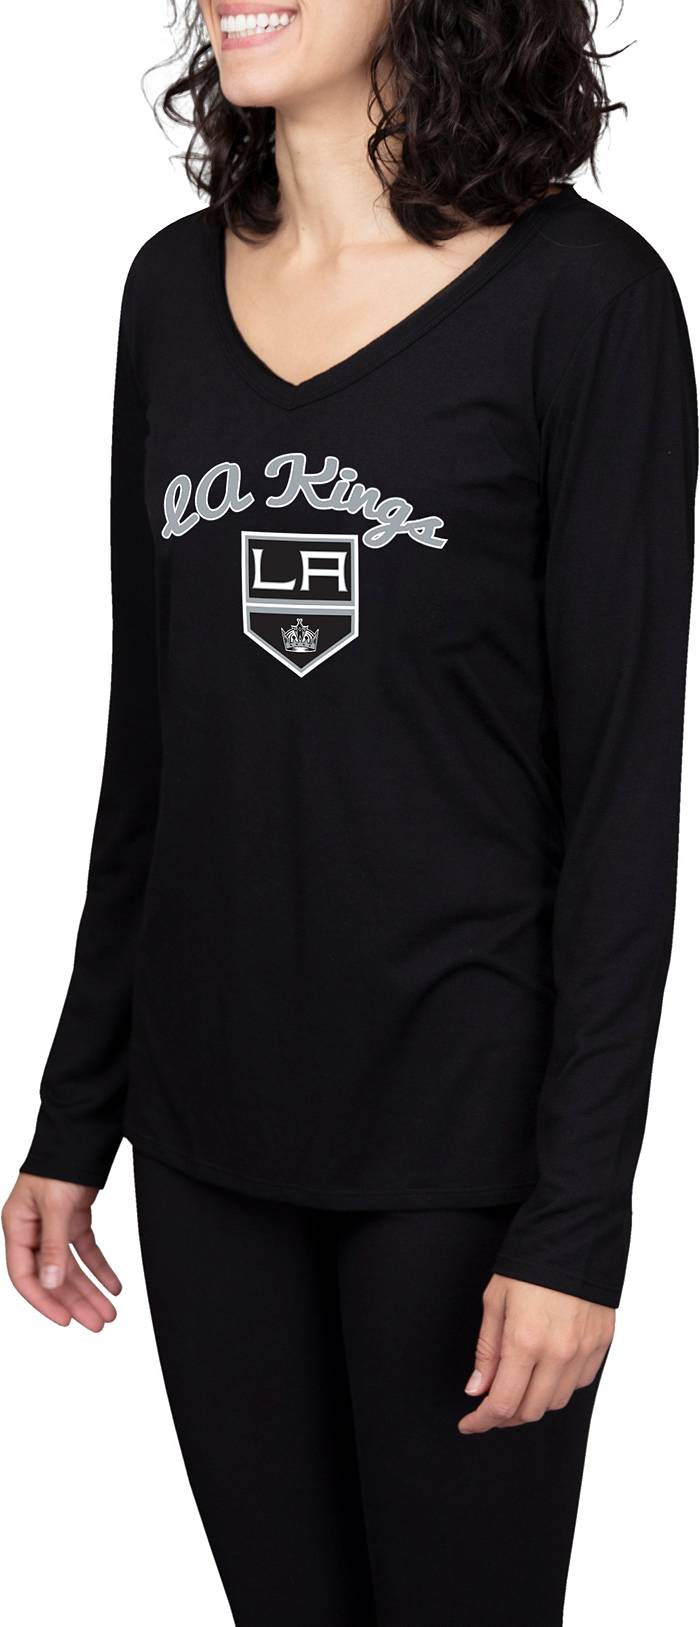 Women's Concepts Sport Oatmeal Los Angeles Kings Tri-Blend Mainstream Terry Short Sleeve Sweatshirt Top Size: Medium